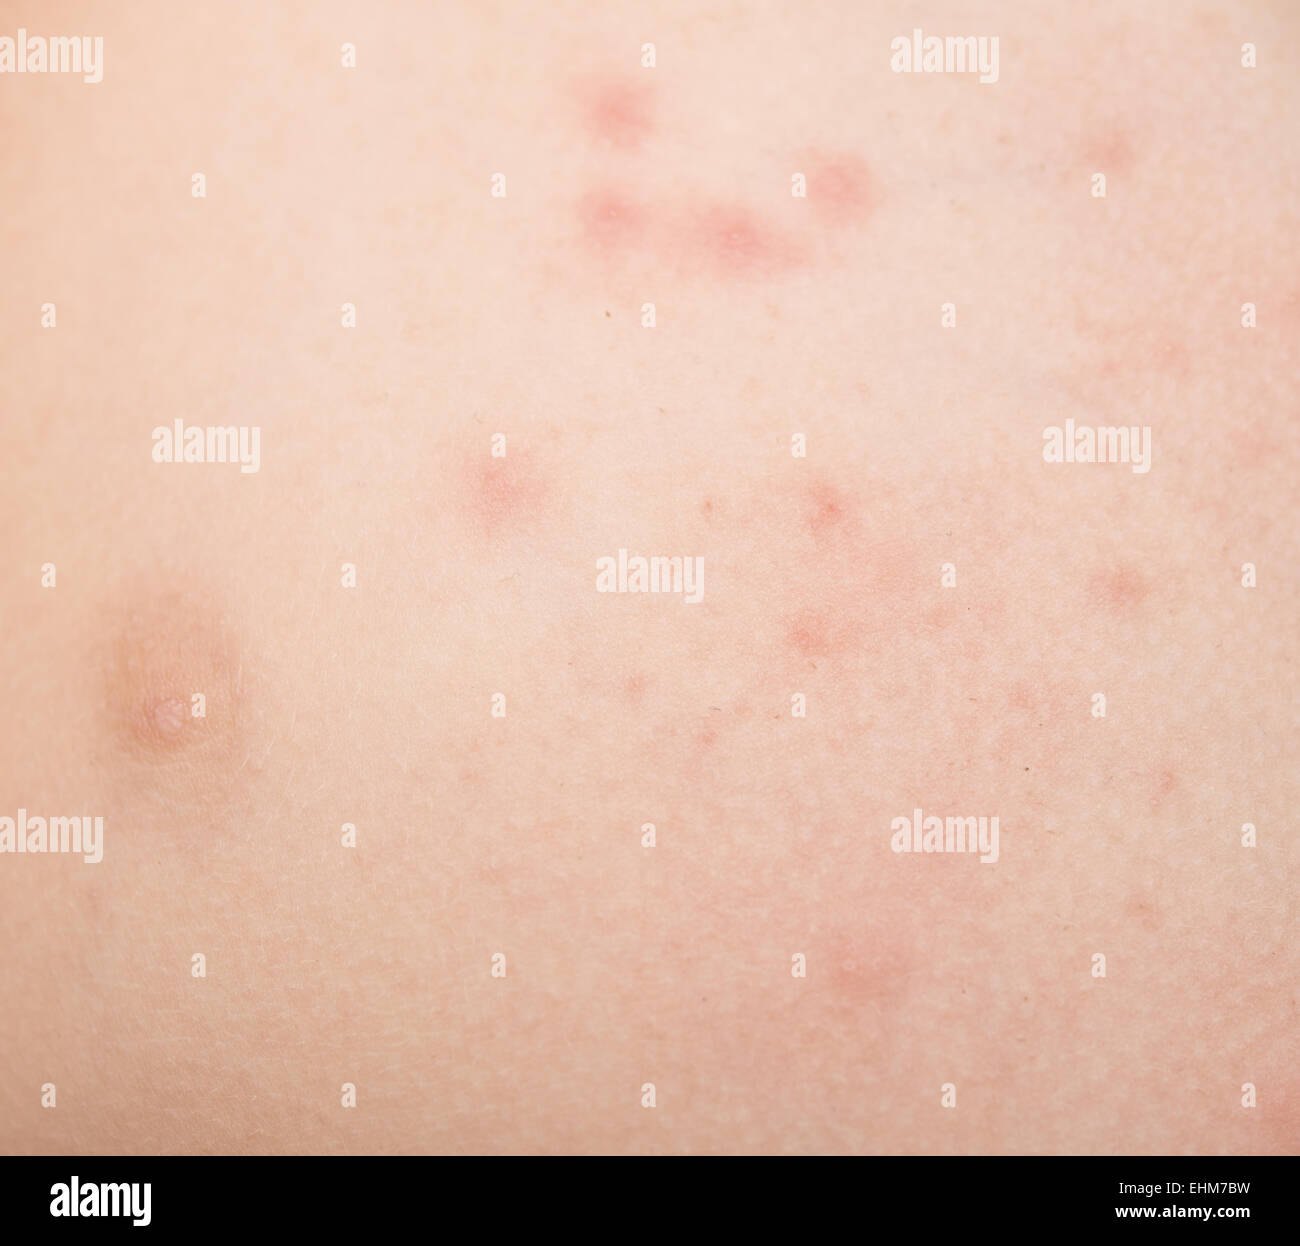 rash on human skin Stock Photo